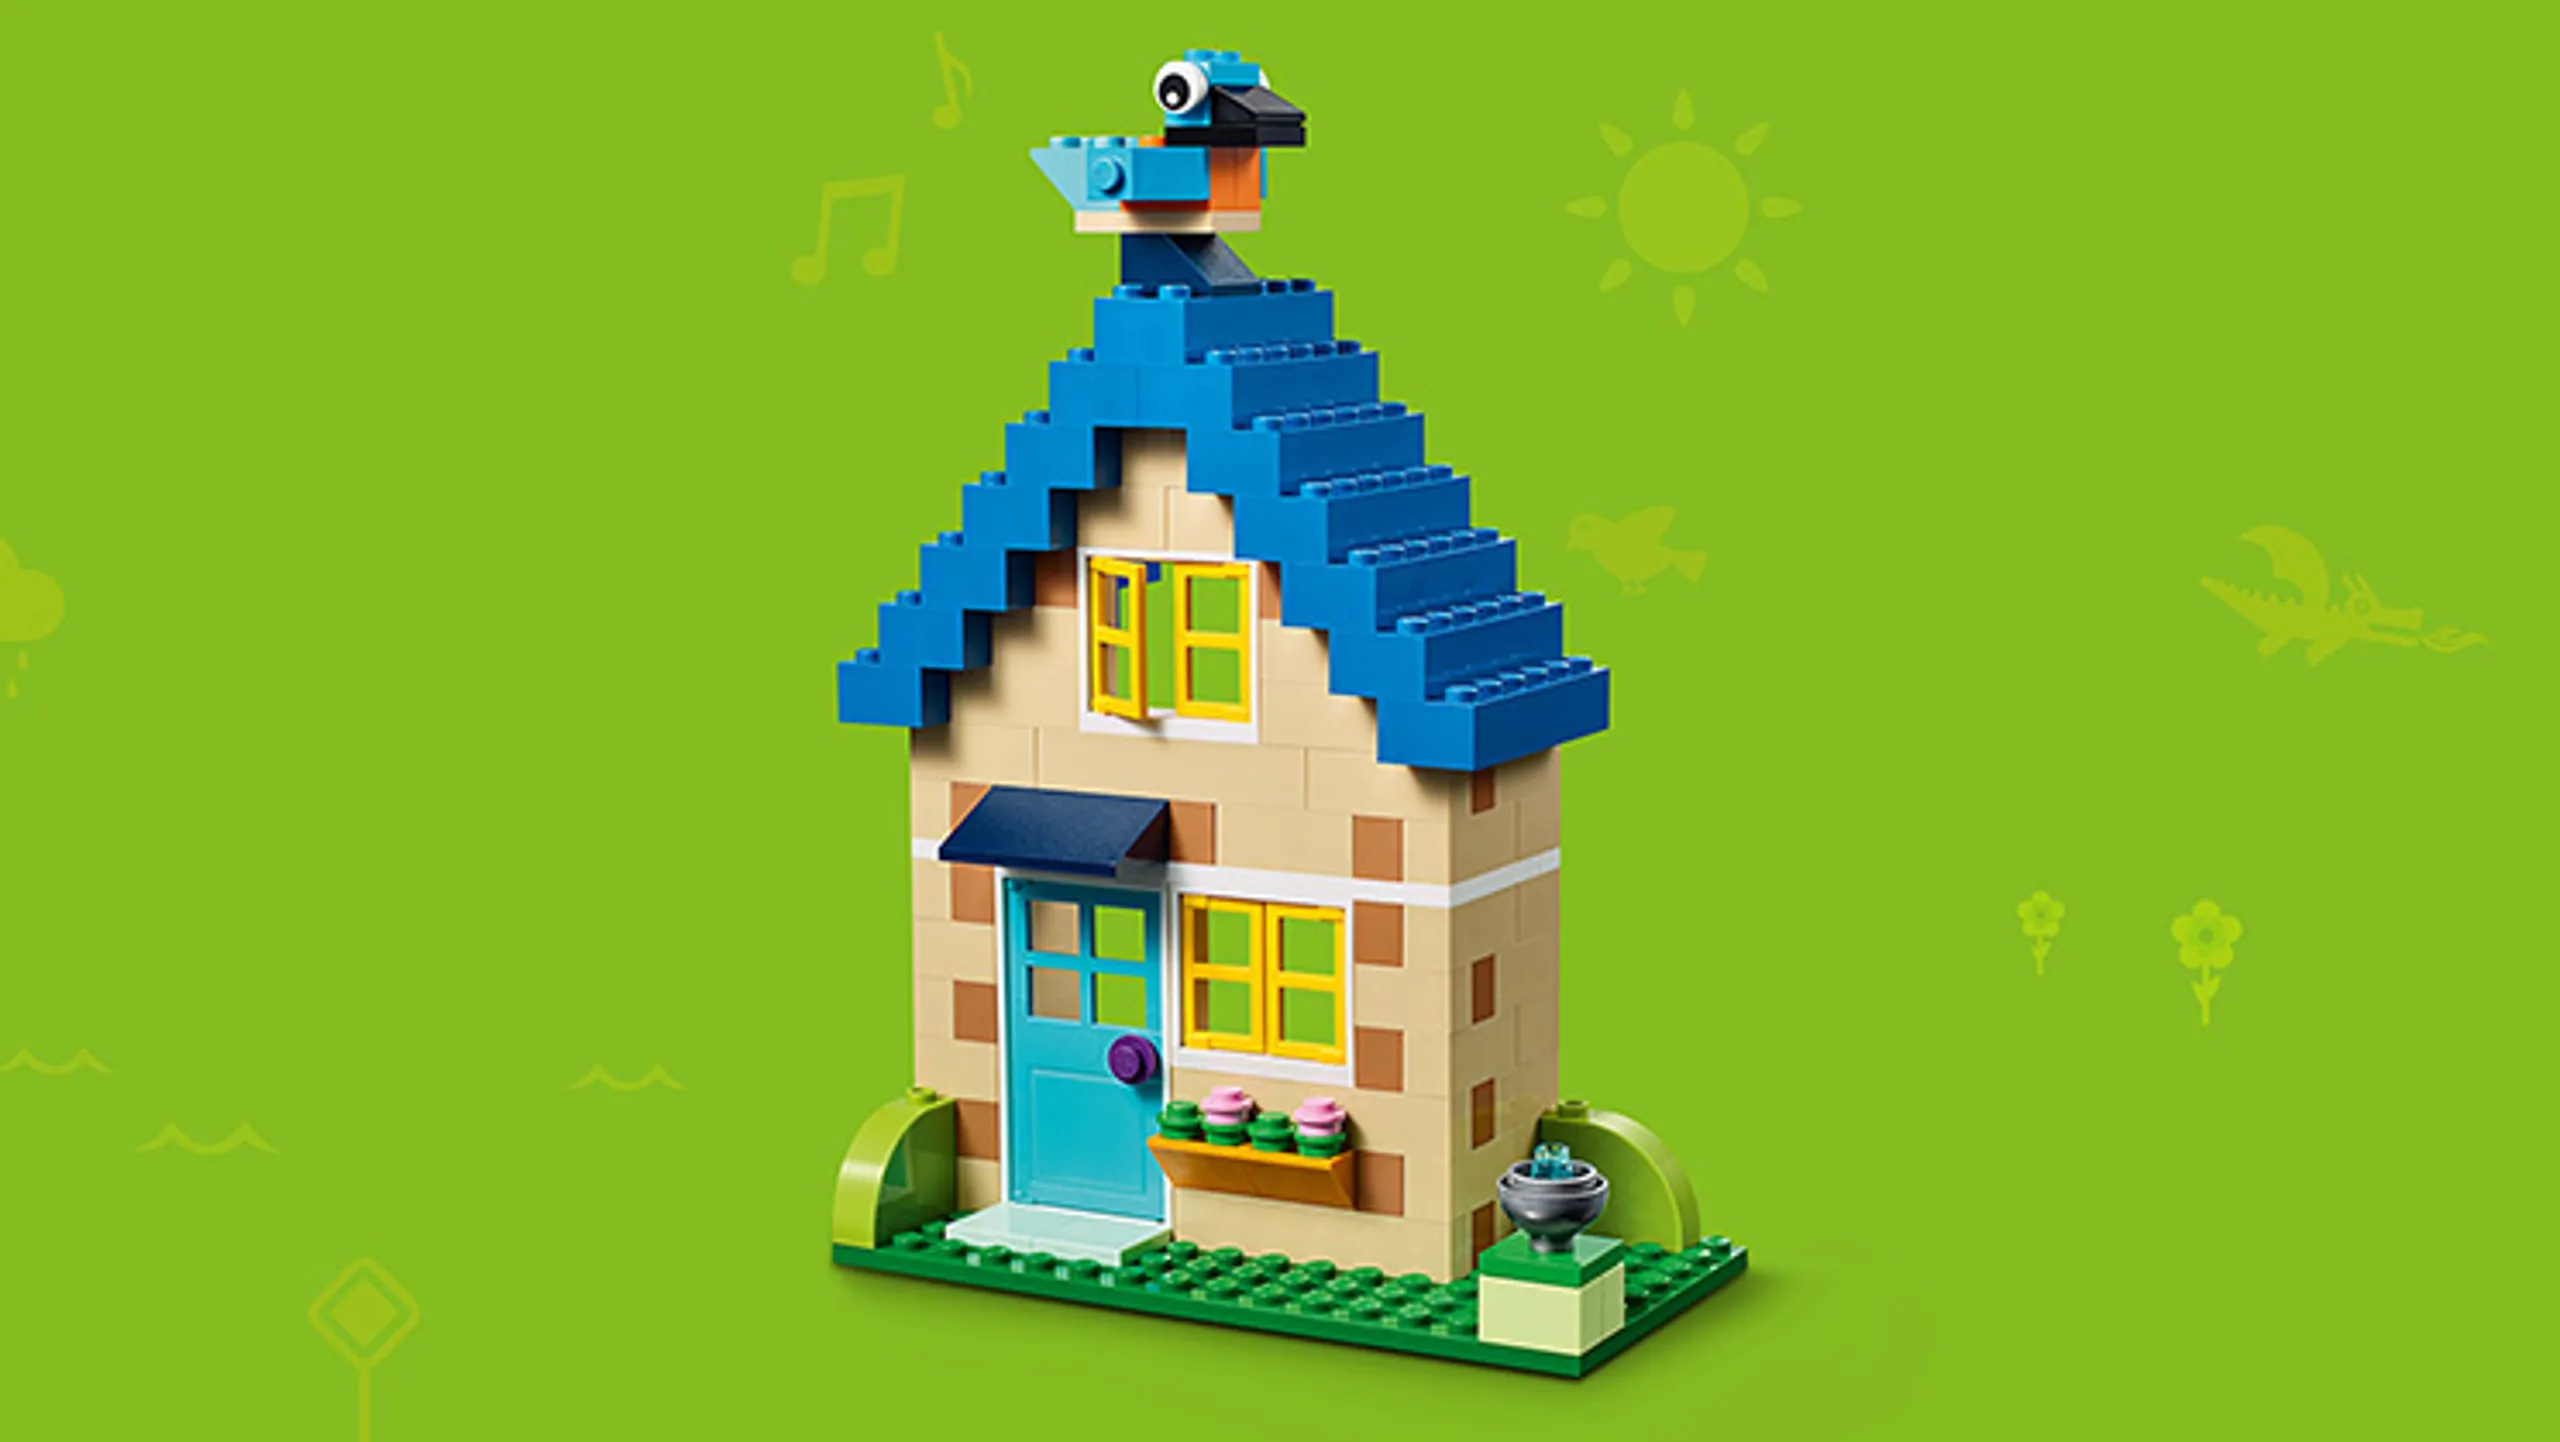 LEGO Classic Bricks Bricks Bricks - 10717 - Build a cosy house with a blue bird sitting on the roof.